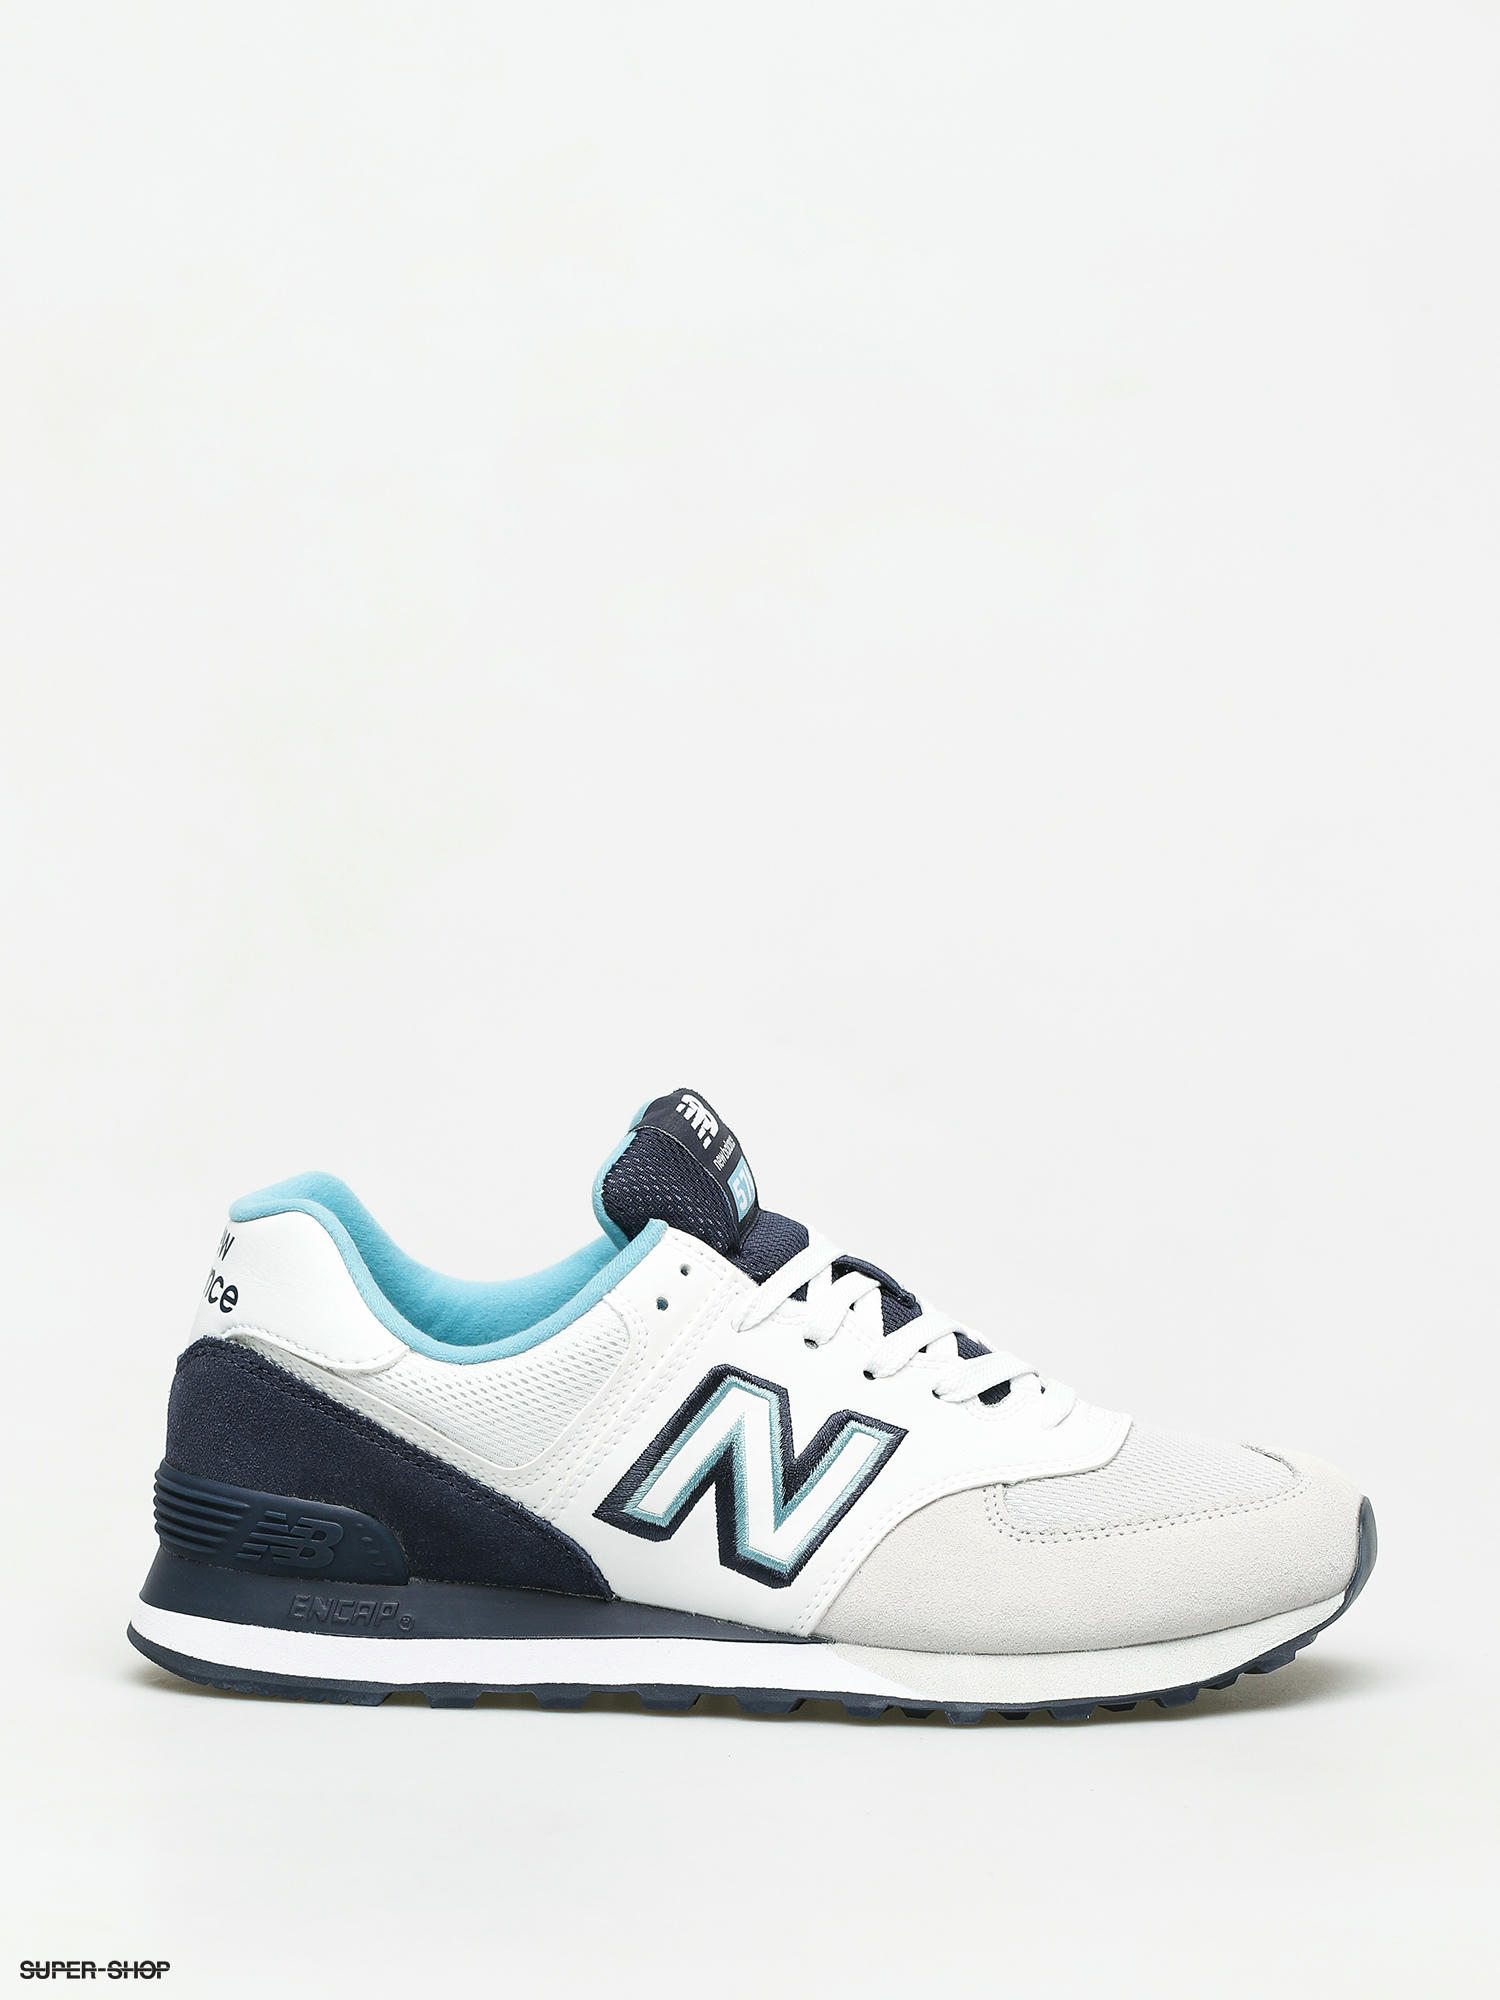 New Balance 574 Shoes (white/navy)